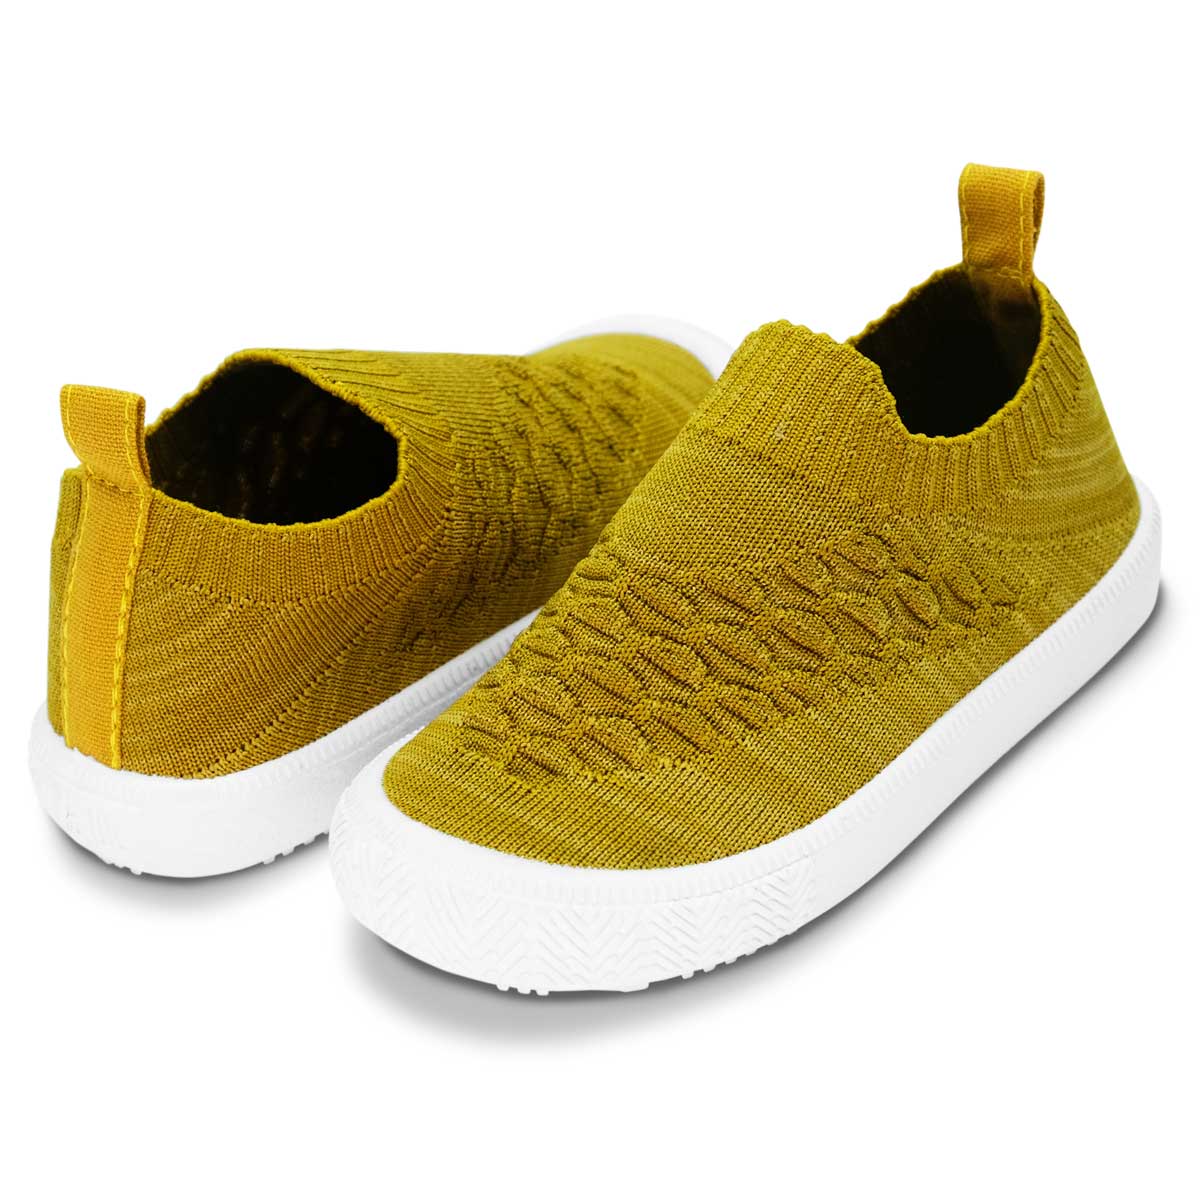 Jan & Jul Girls Shoes for Kids, Slip-on Toddler Sneakers (Mustard, US Size 11) - image 3 of 6